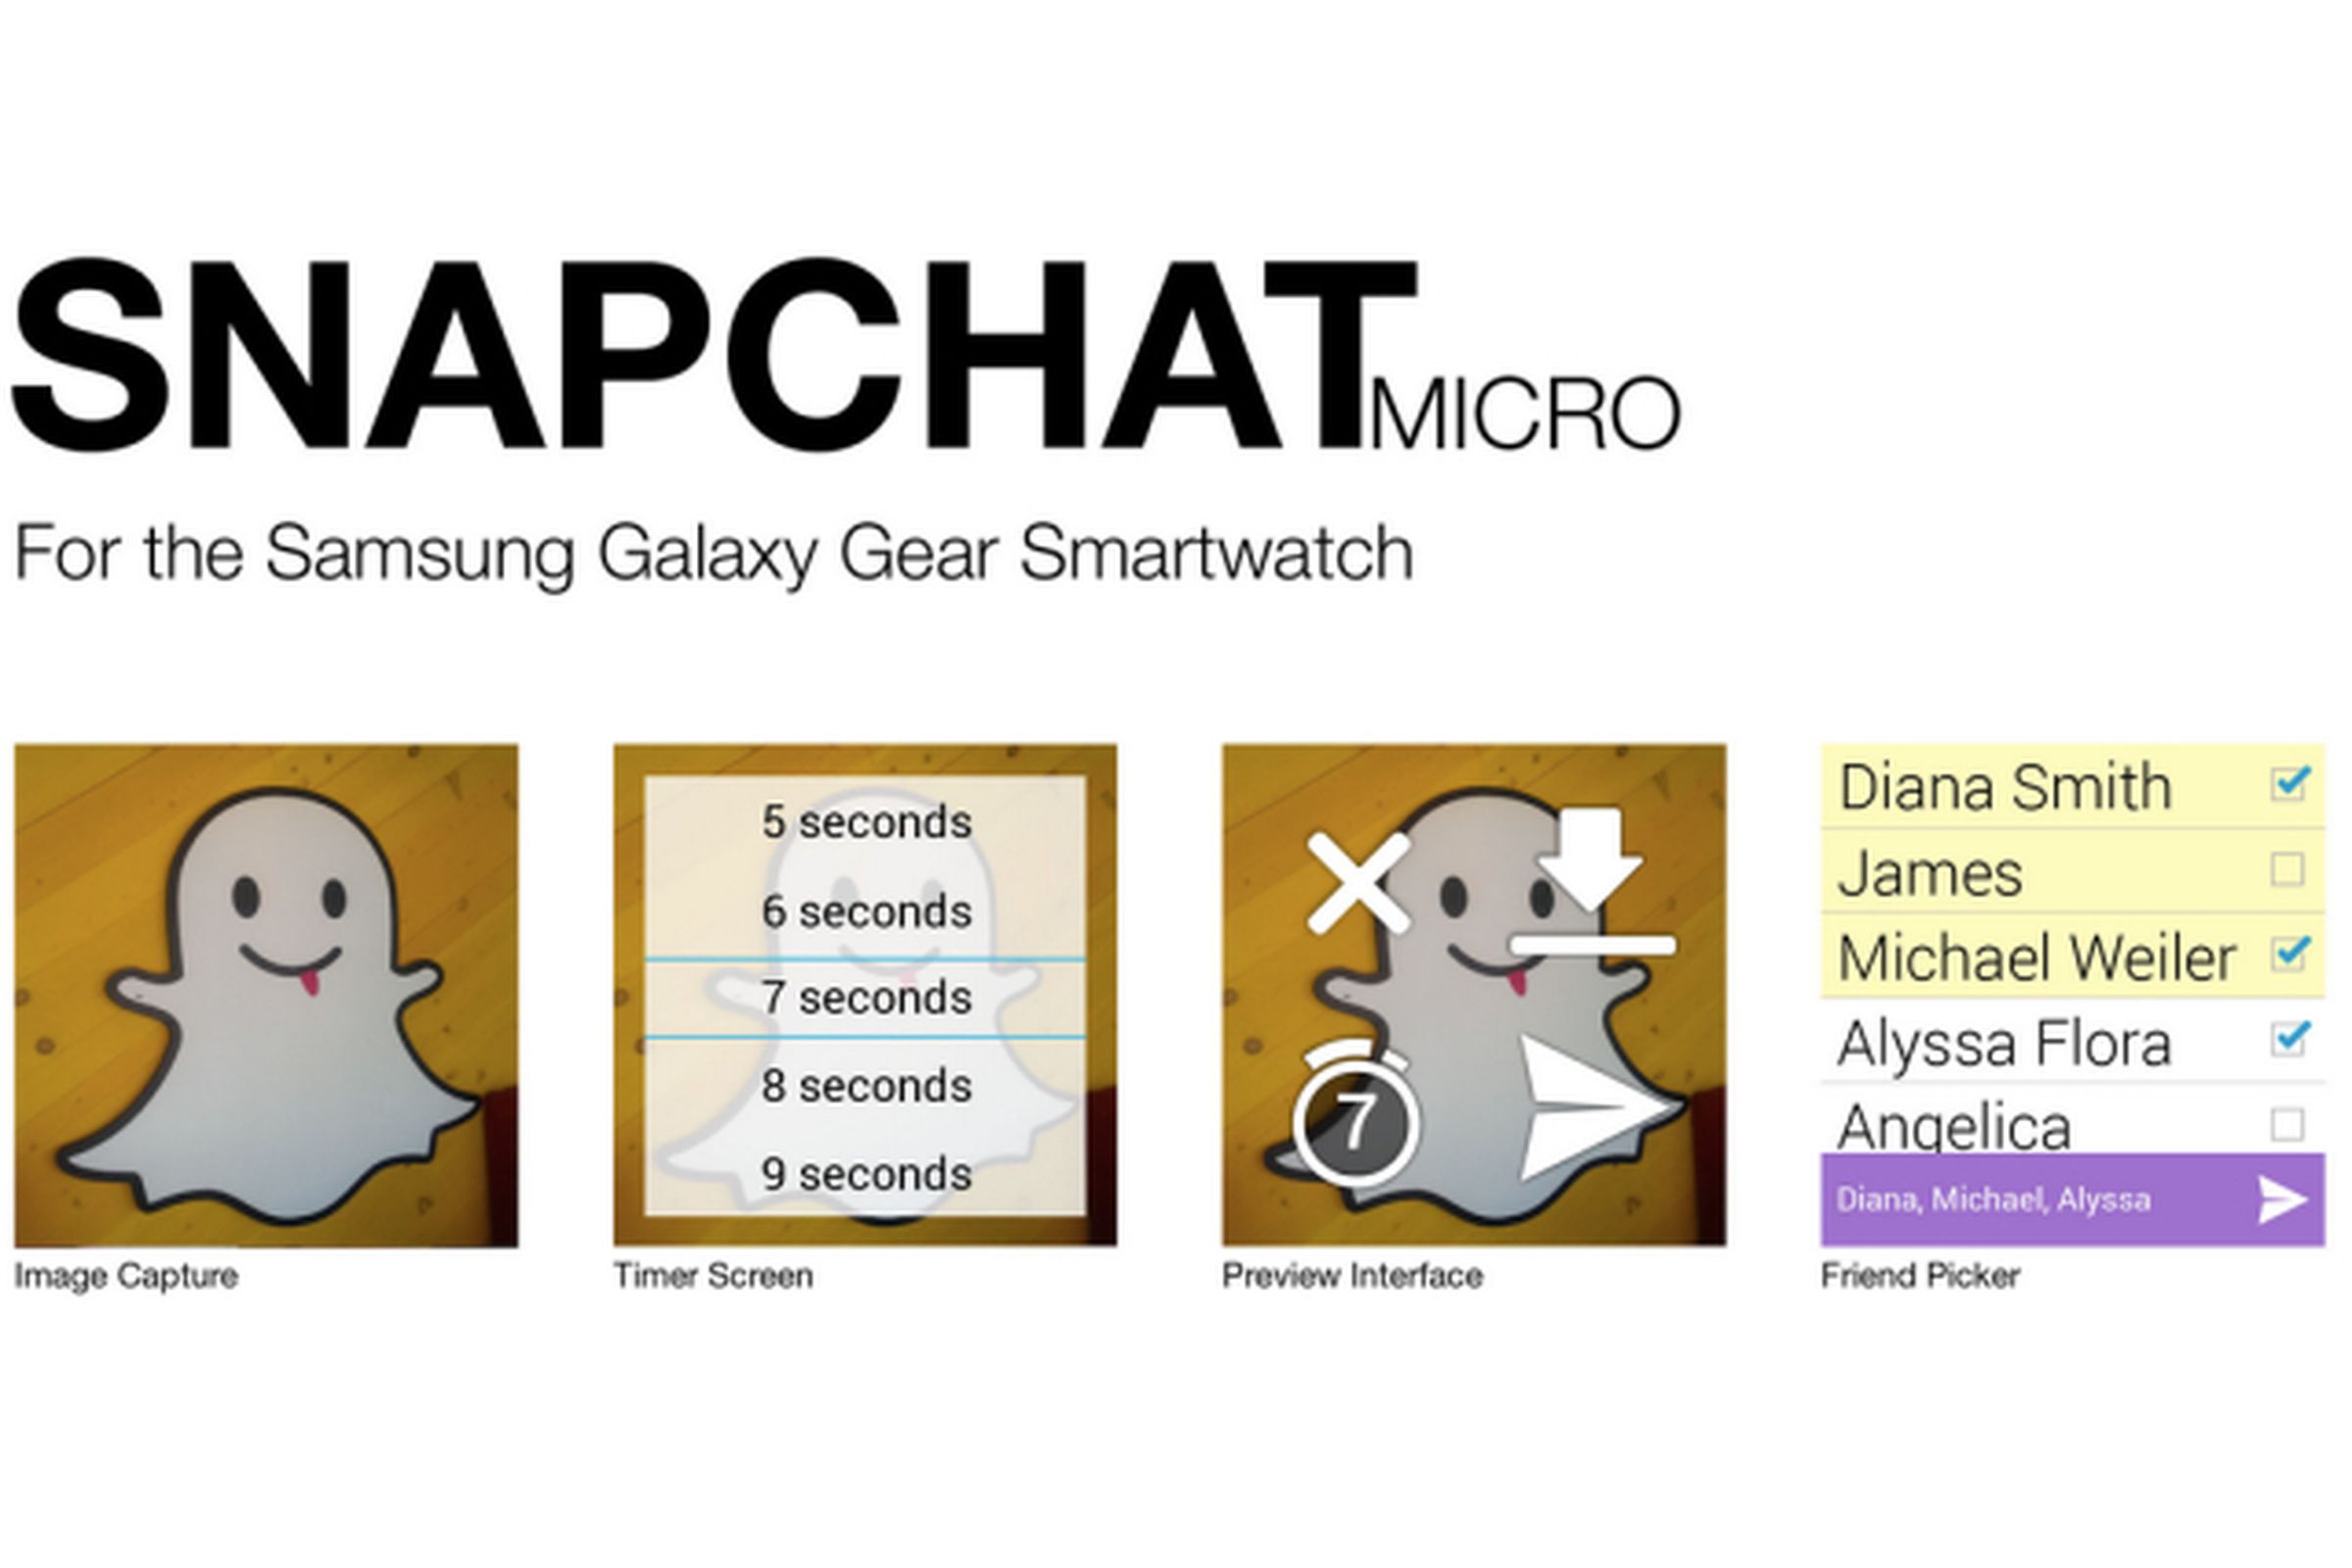 Snapchat Micro resized